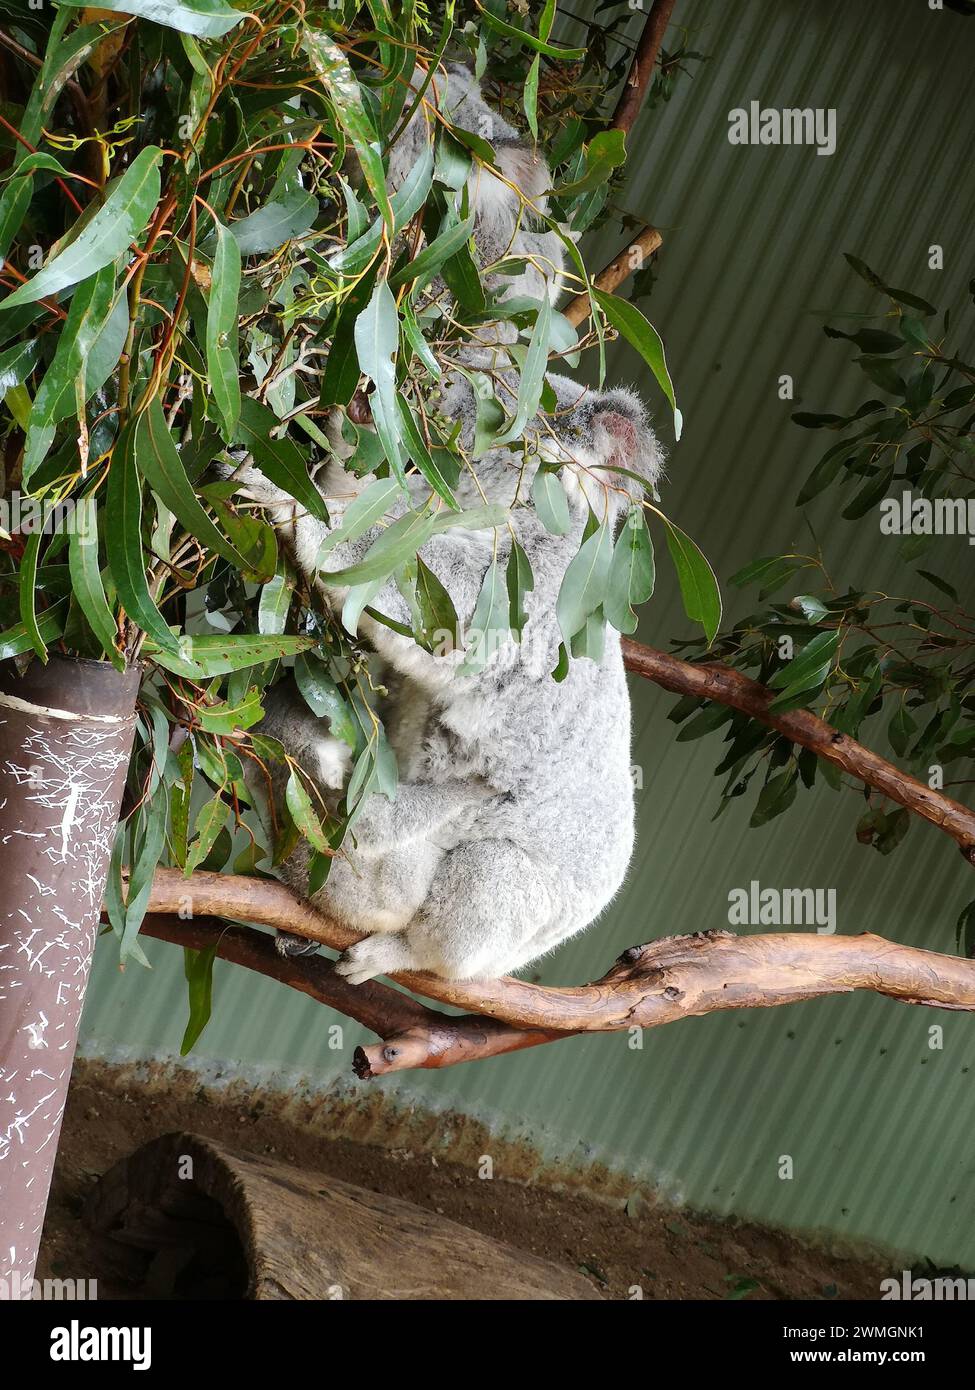 Un koala che sgranocchiava foglie verdi fresche in un albero a Sydney, Australia, nel Featherdale Sydney Wildlife Park Foto Stock